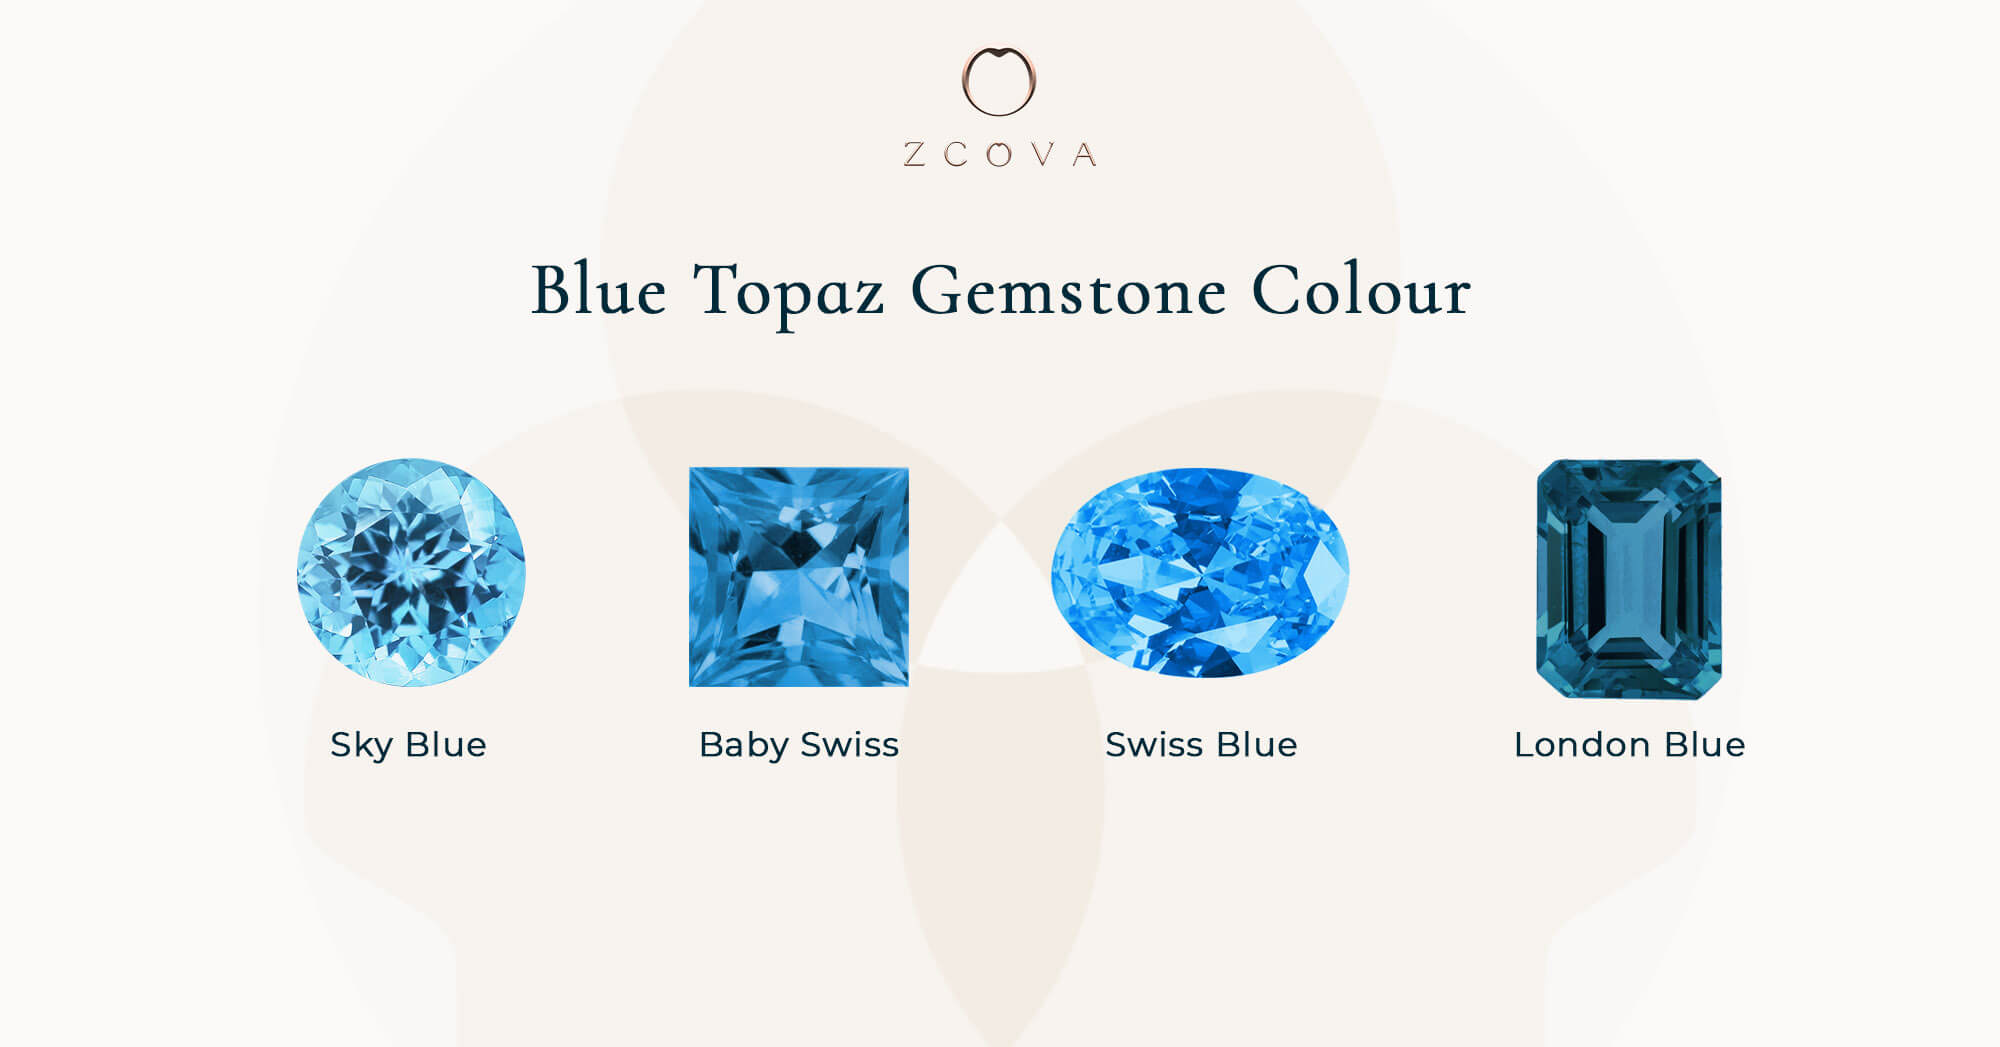 Blue topaz gemstone colours and shape